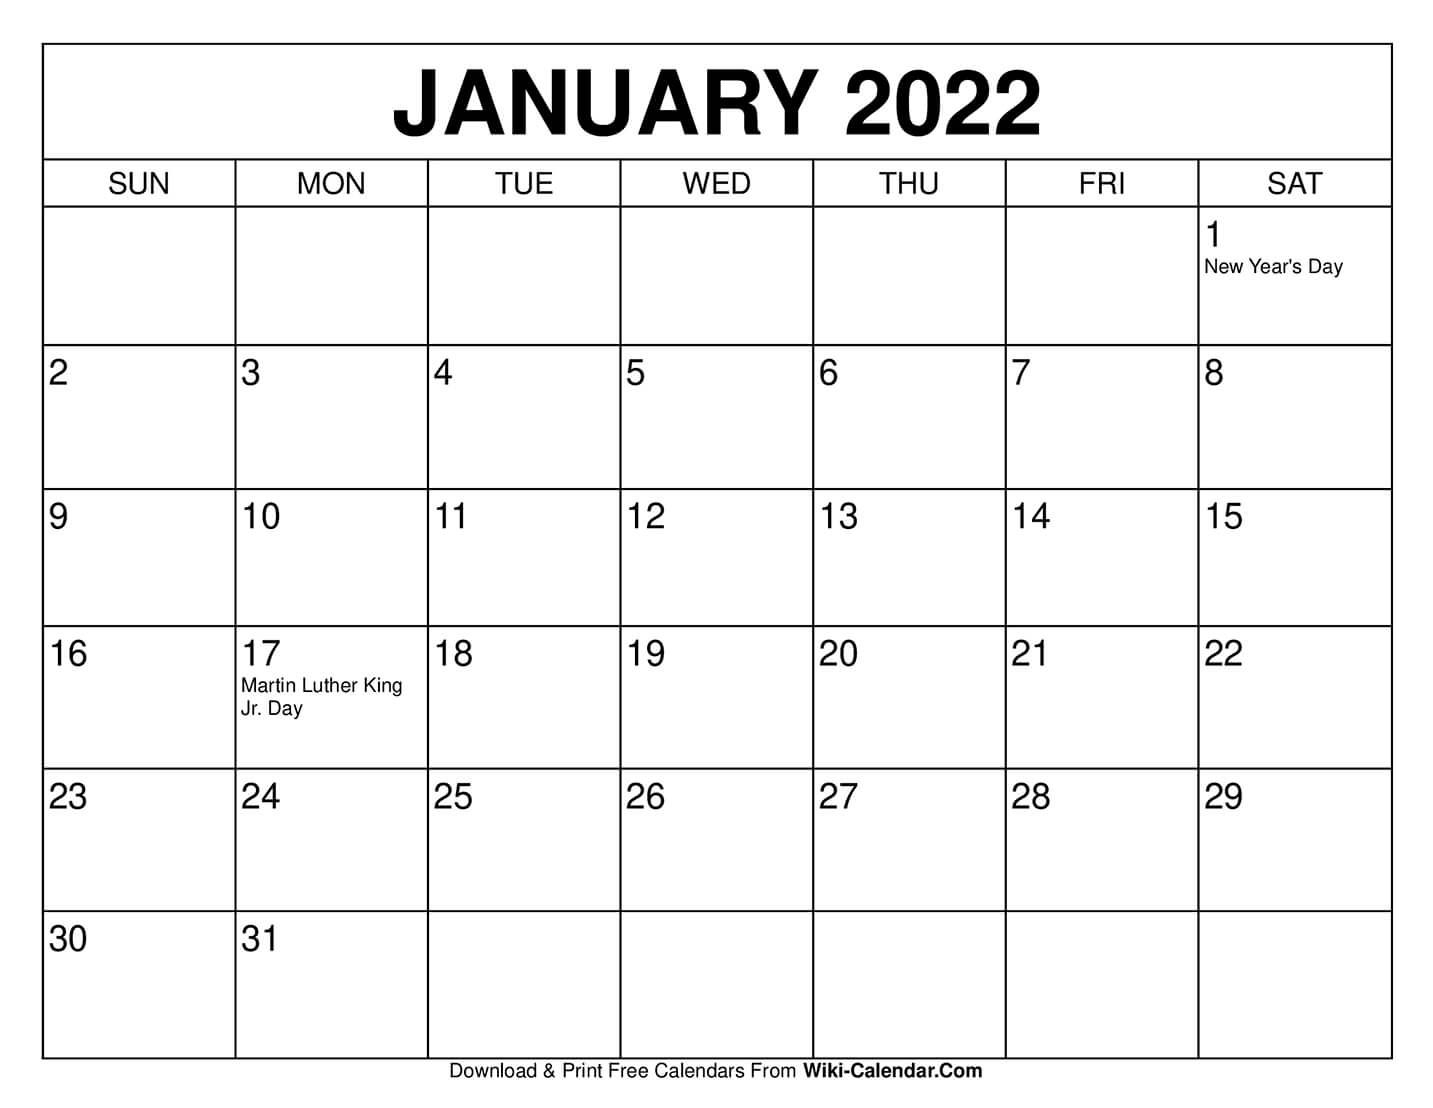 Download Calendar January 2021 / November 2020 To January